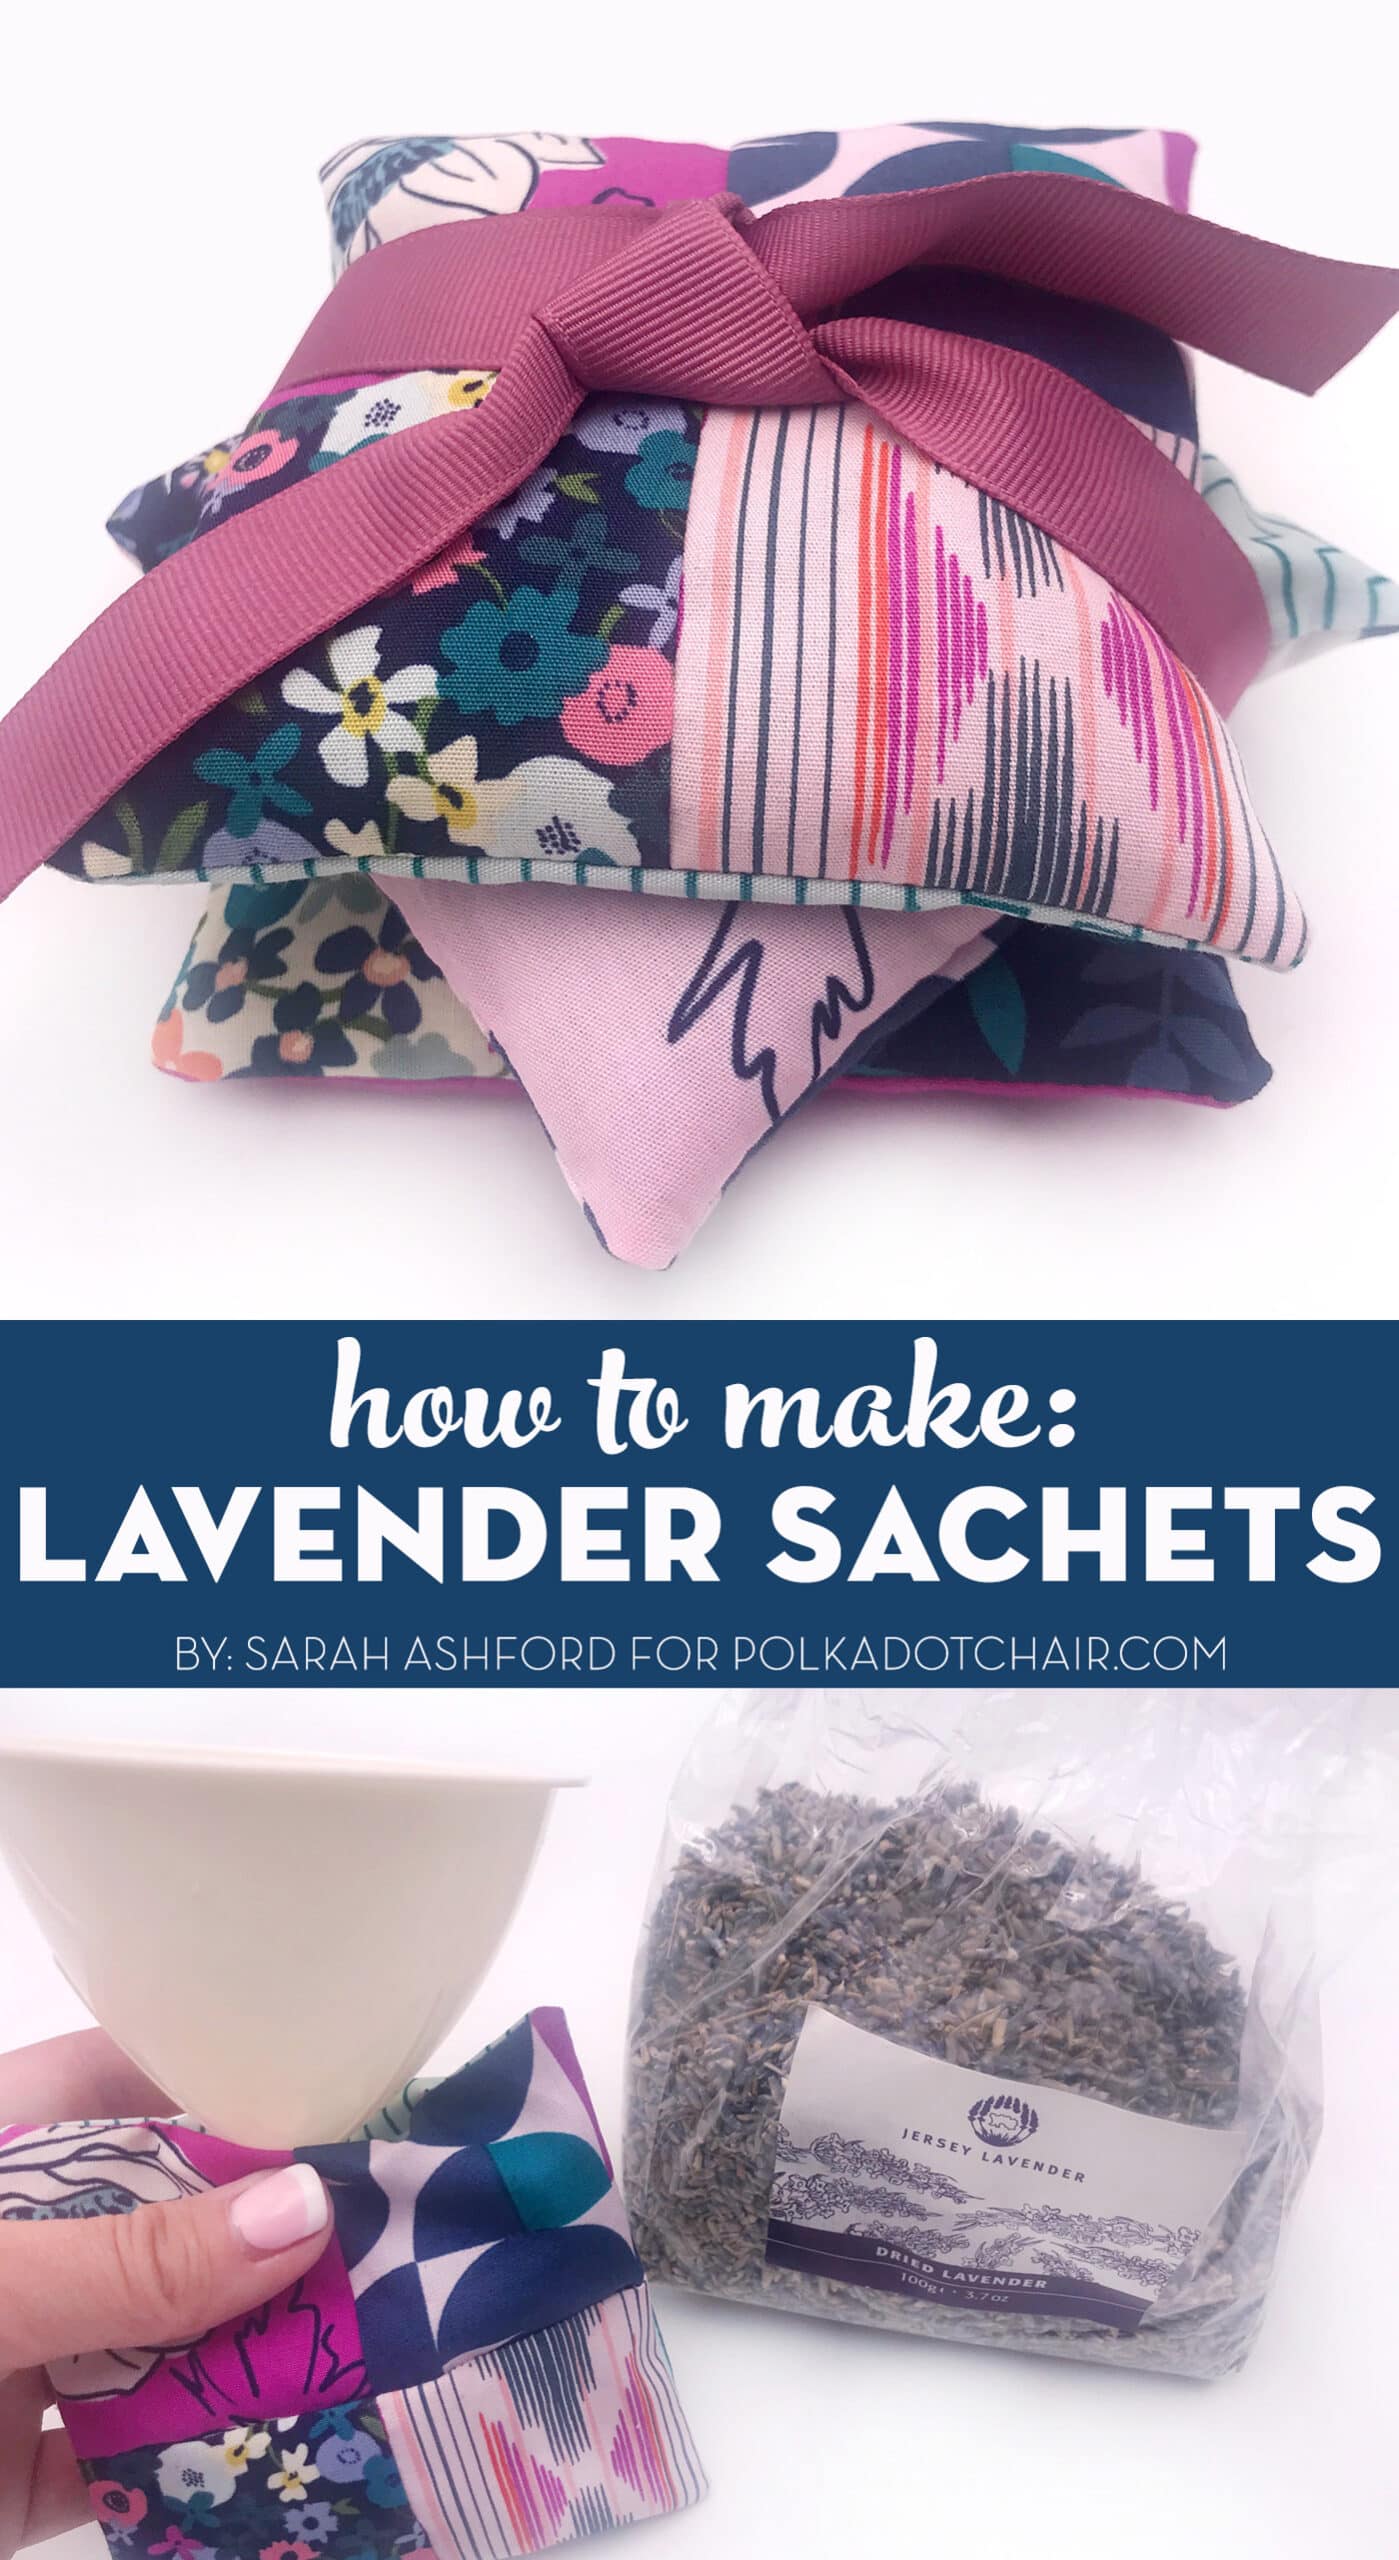 How to Make Lavender Sachets